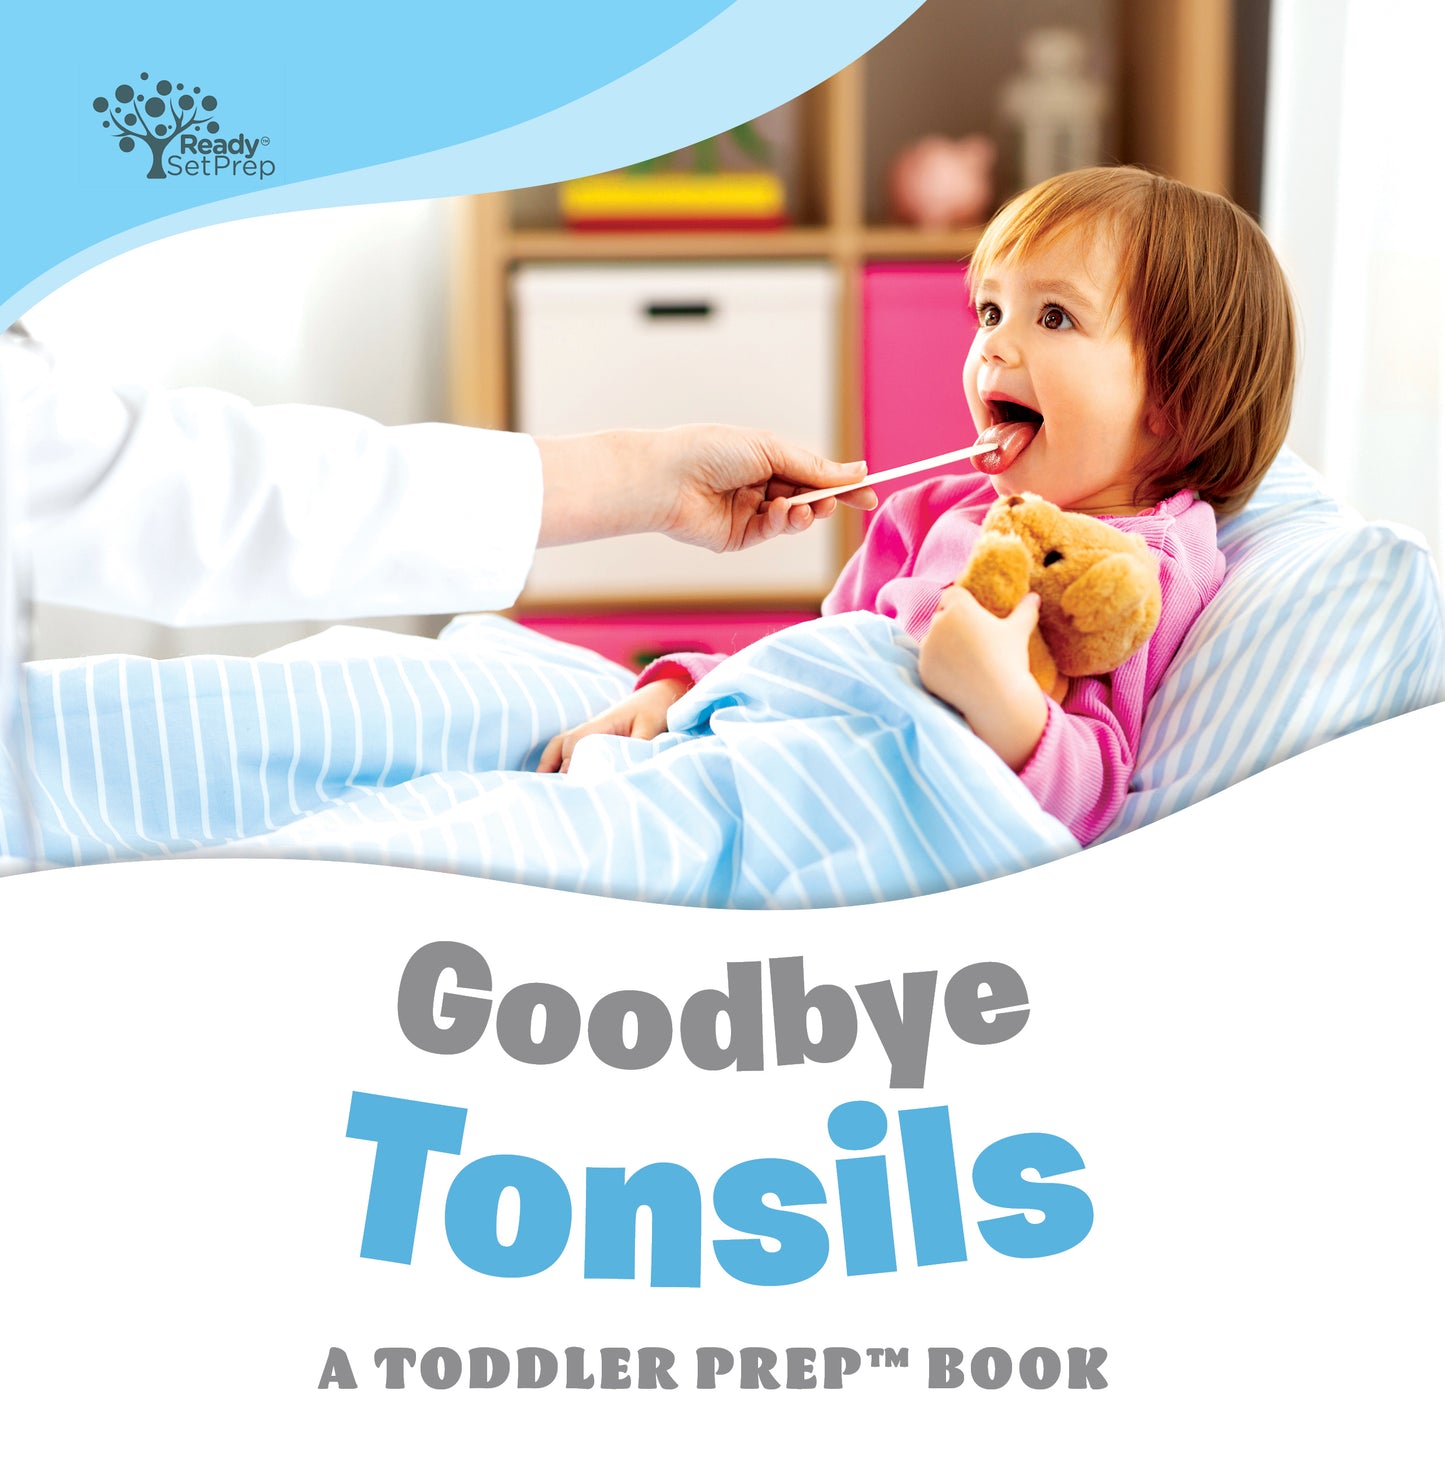 Goodbye Tonsils: A Toddler Prep Book